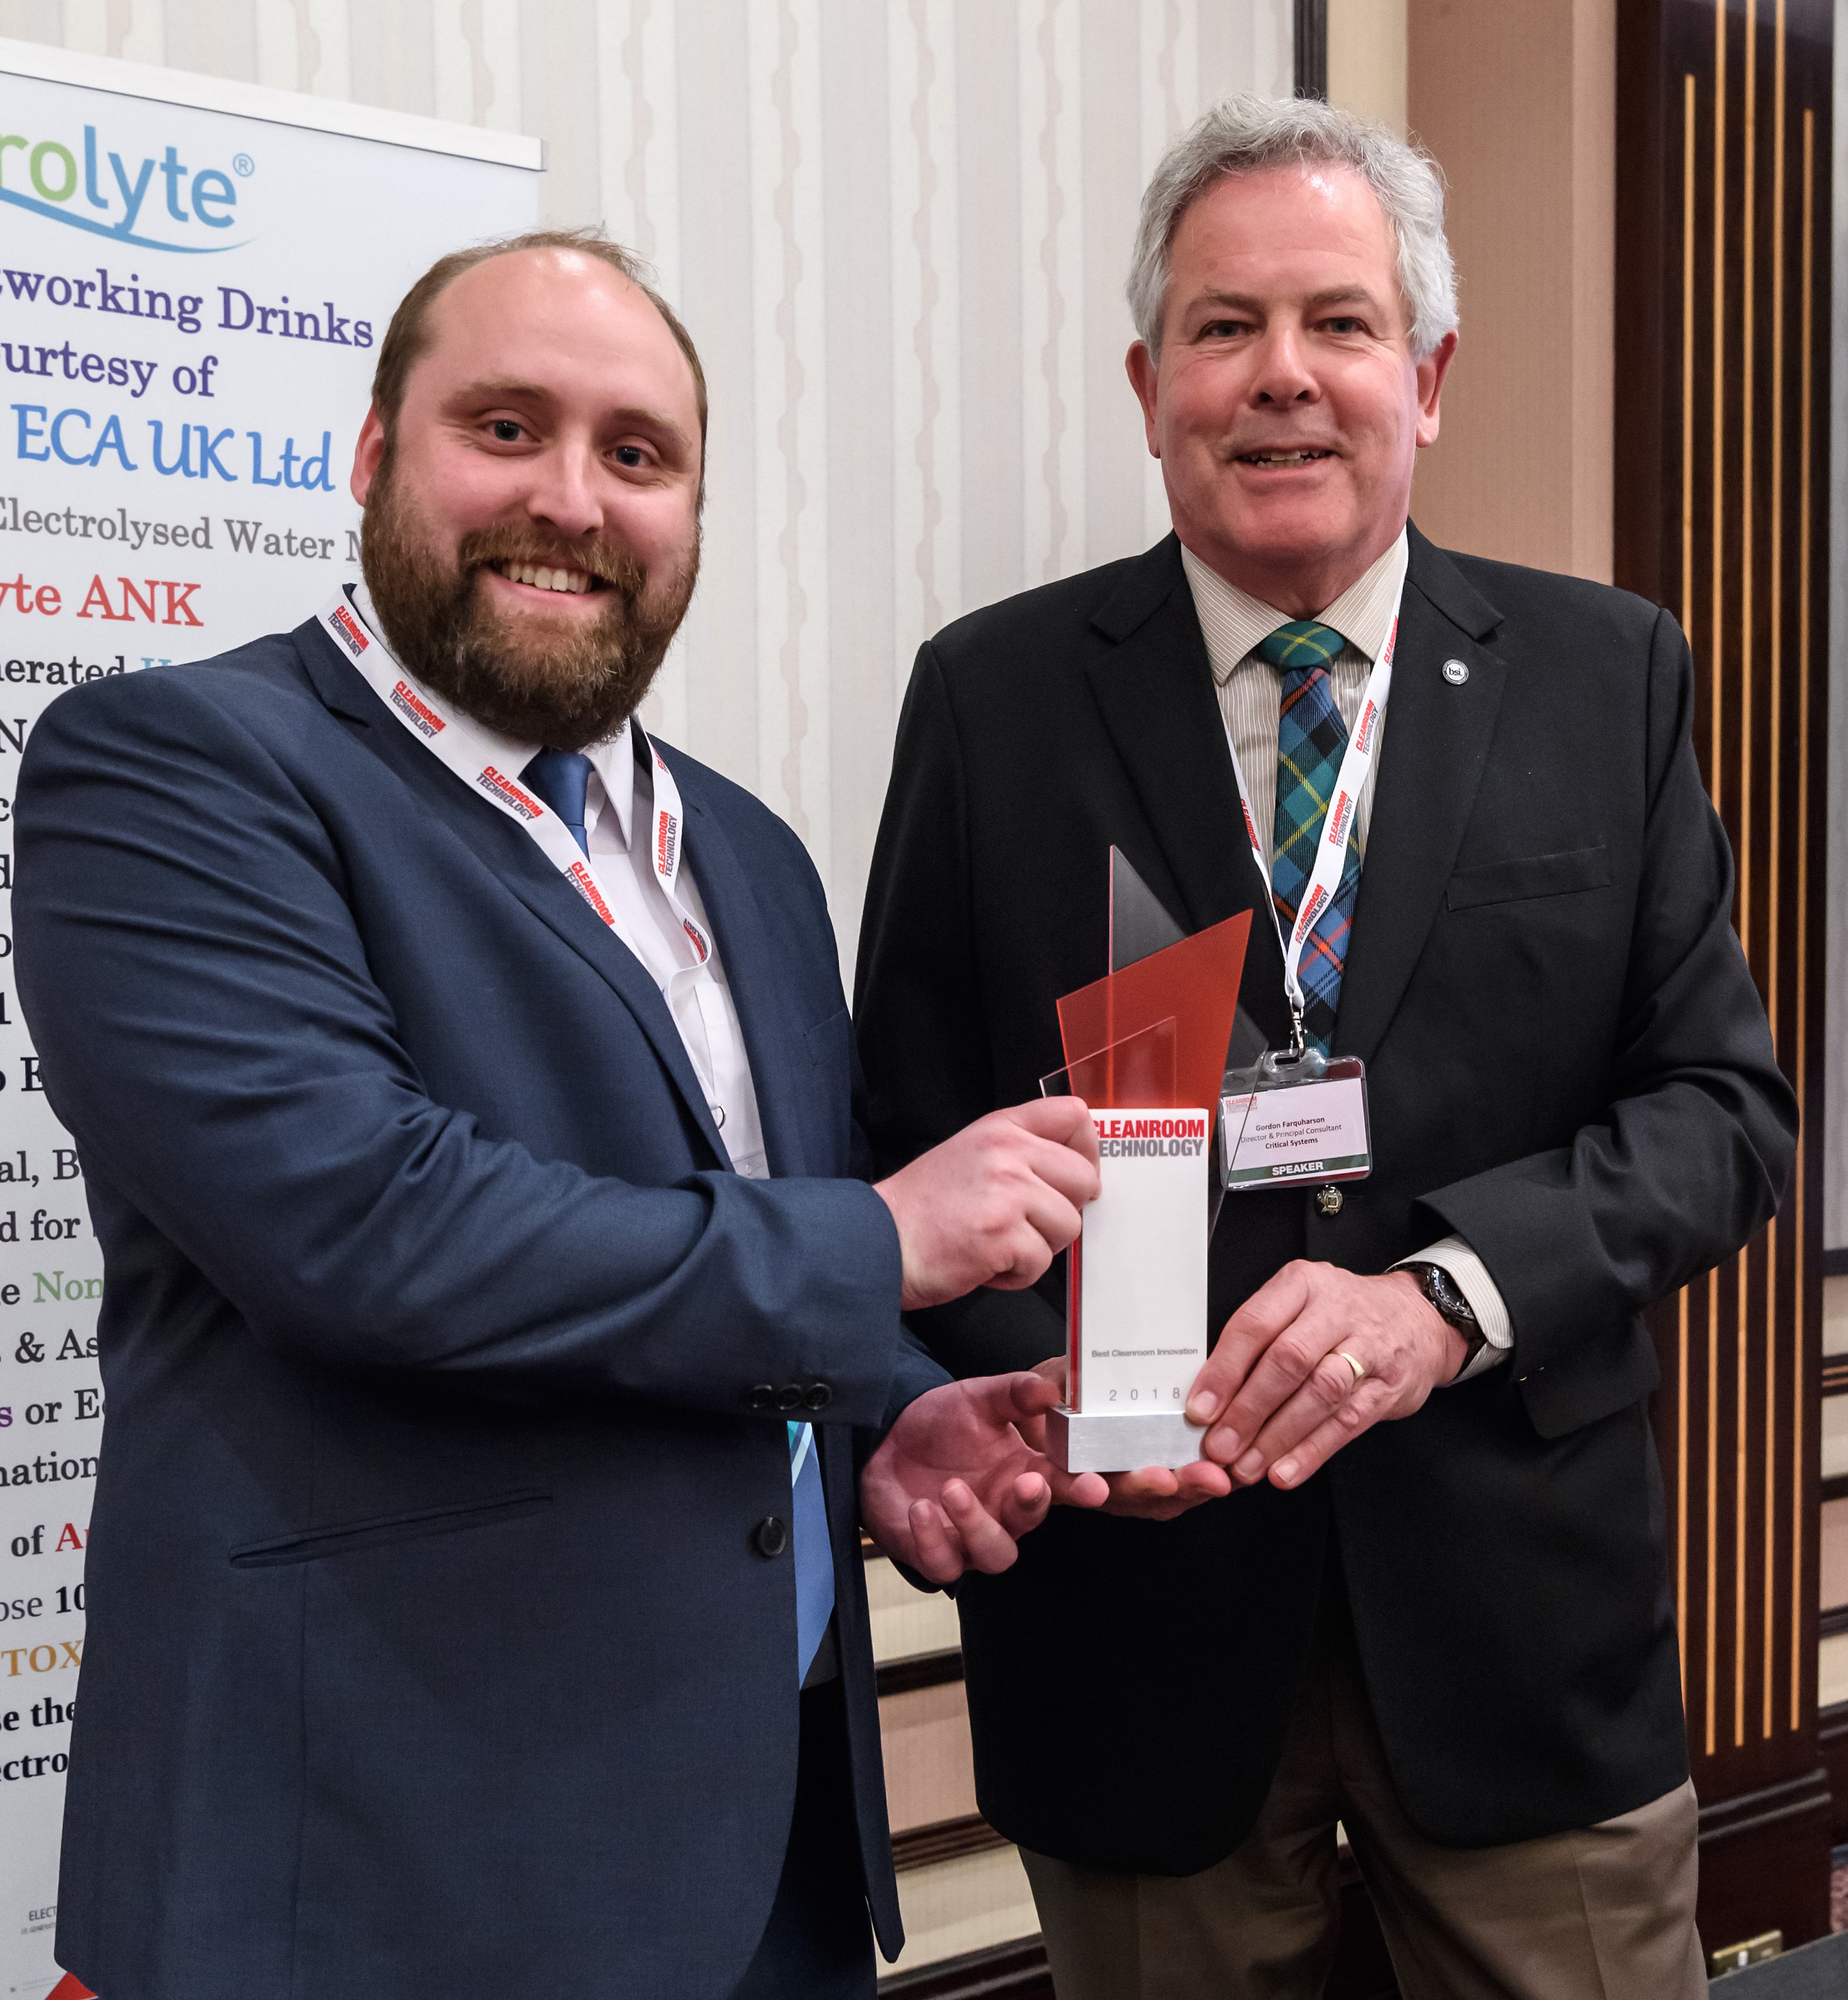 Honeyman receives Cleanroom Technology Innovation Award